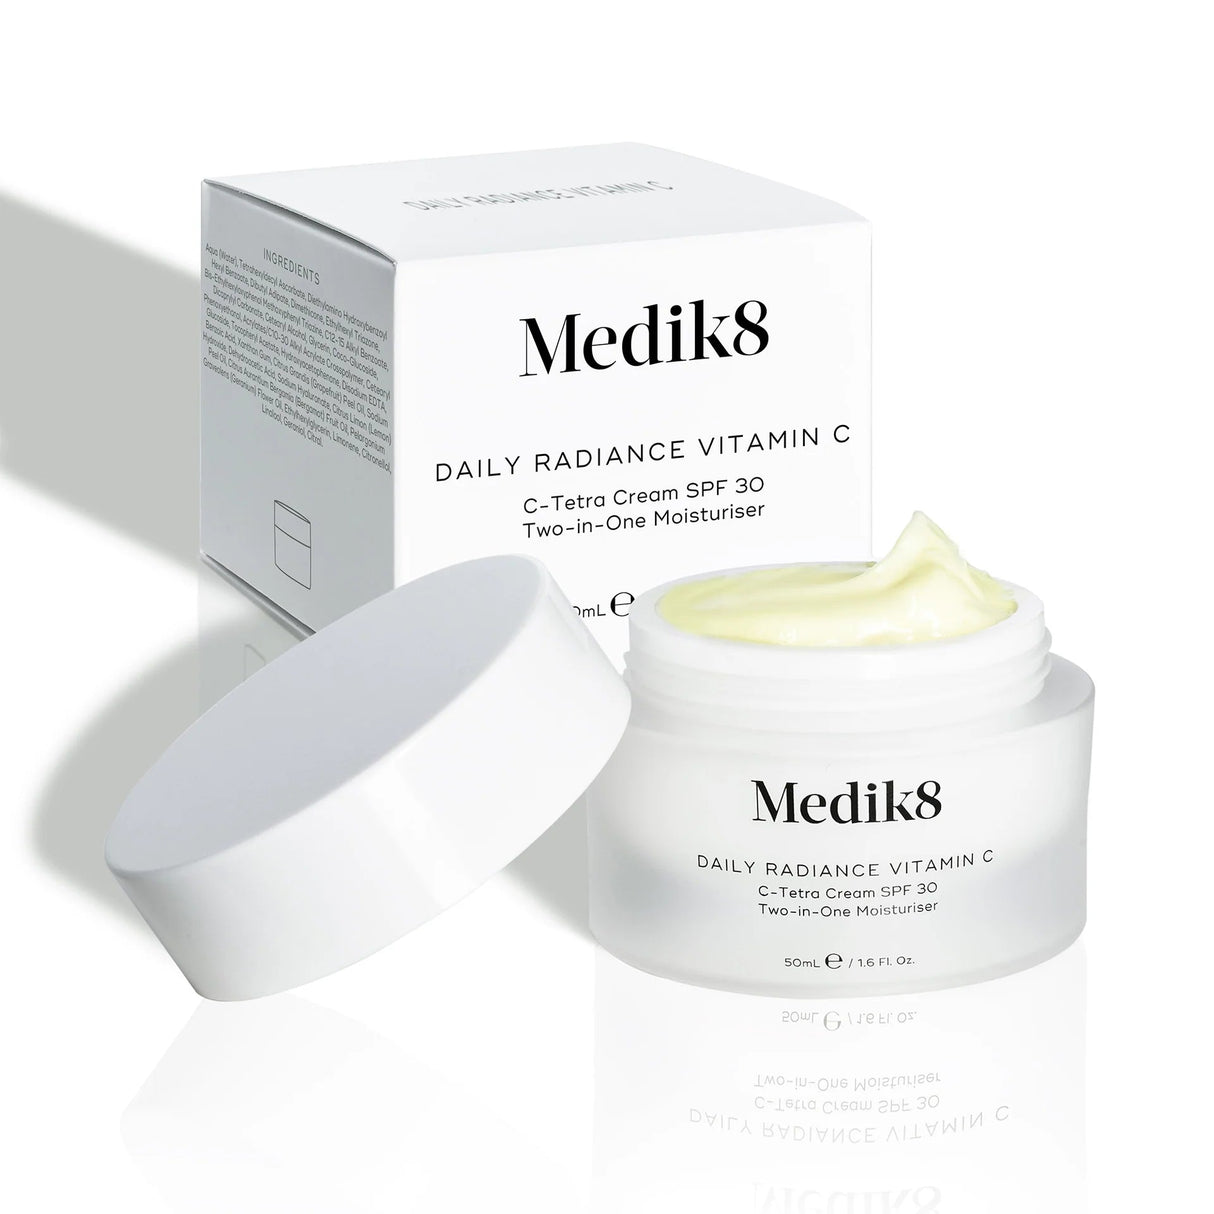 Medik8 - Medik8 Daily Radiance Vitamin C™ - Skintique - Skin care